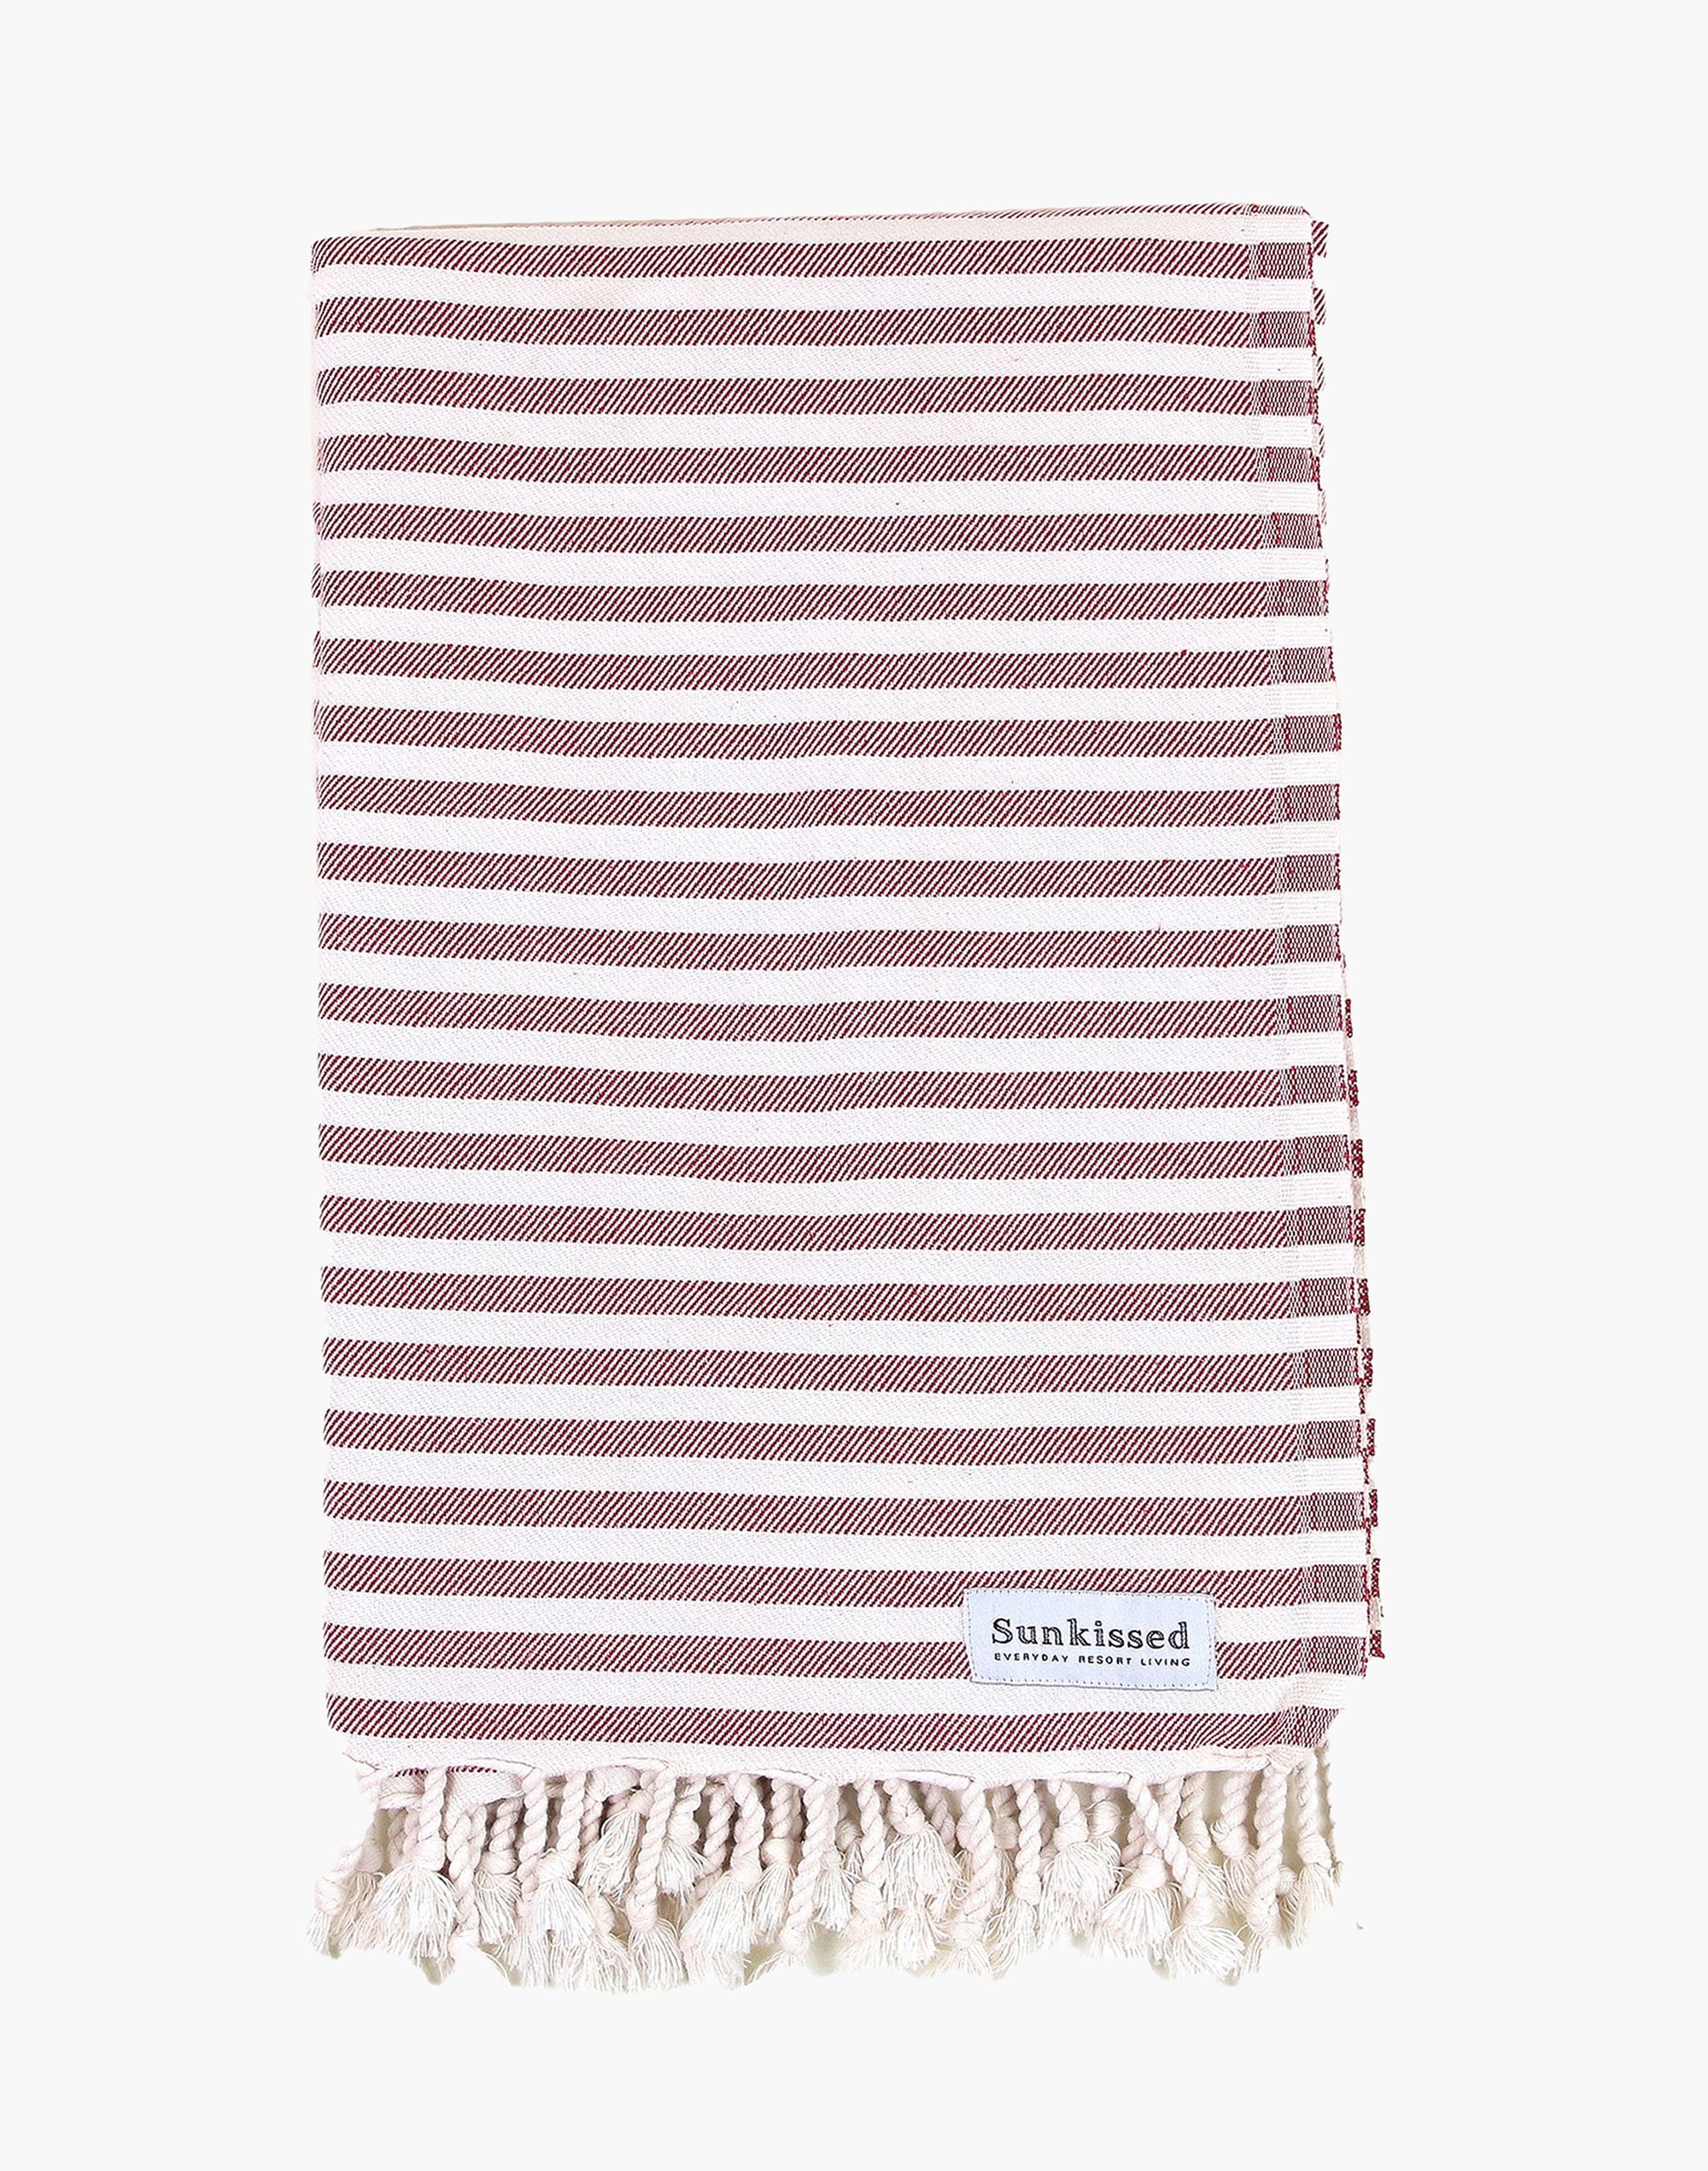 Sunkissed Organic Cotton Bermuda Sand-Free Beach Towel in Stripe